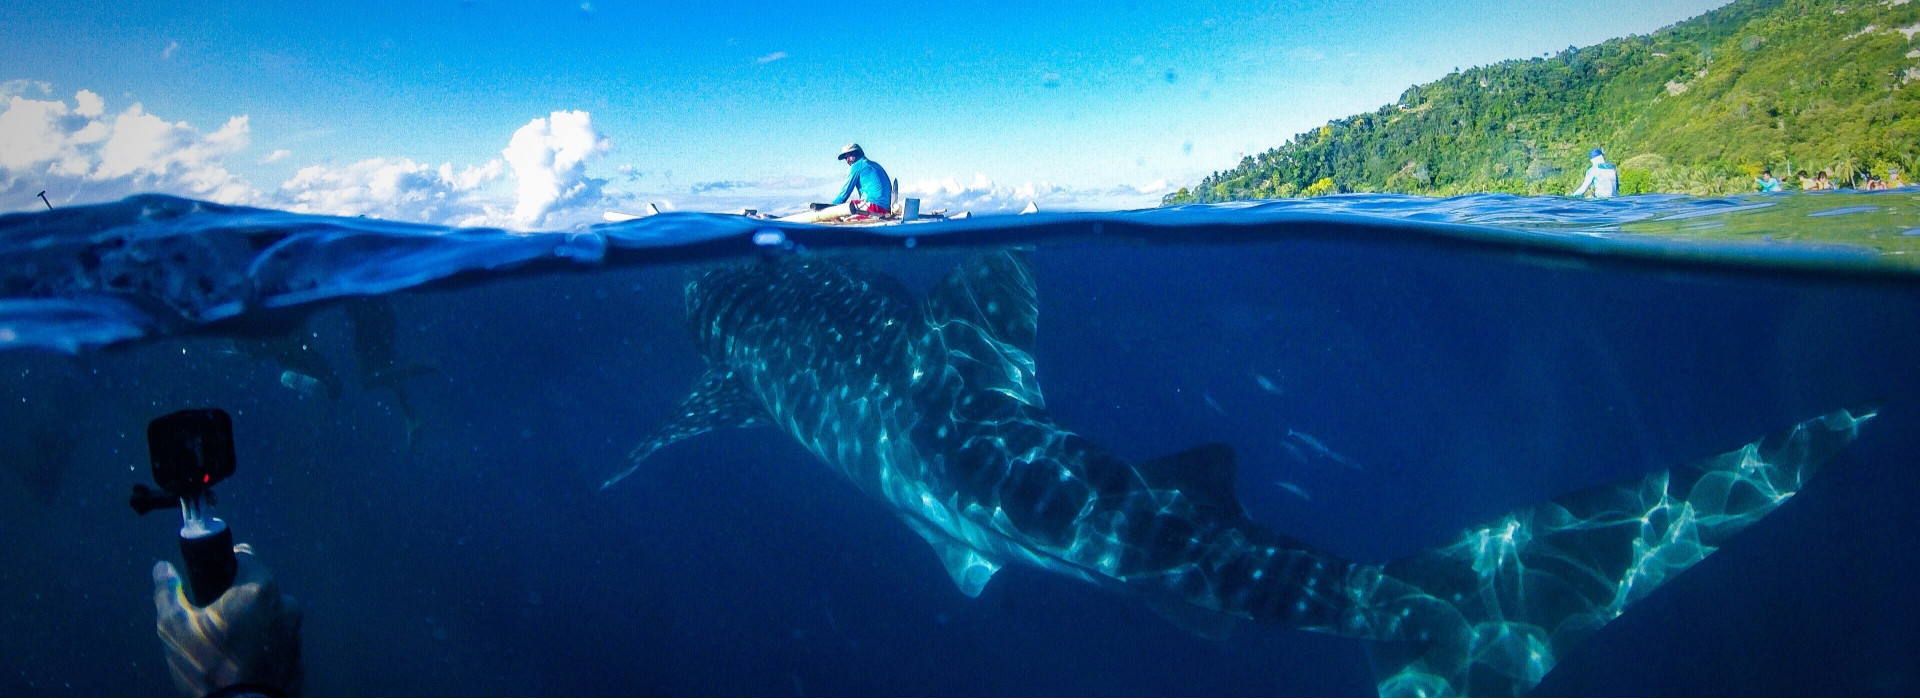 whale-shark-watching banner